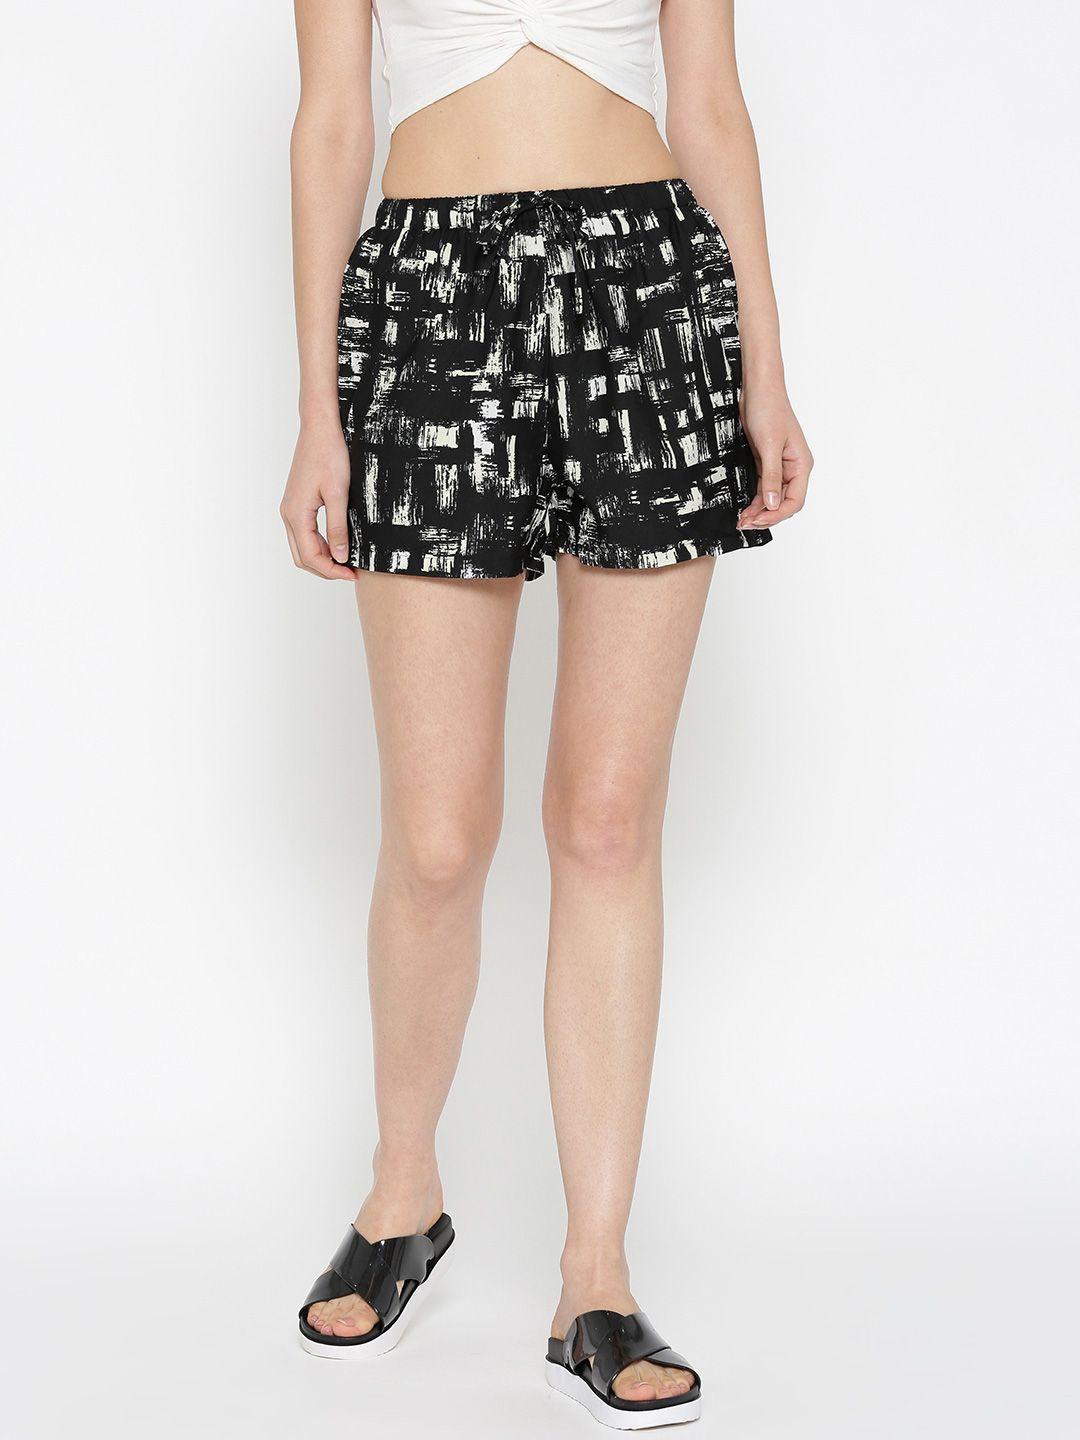 sera-women-black-&-off-white-printed-shorts